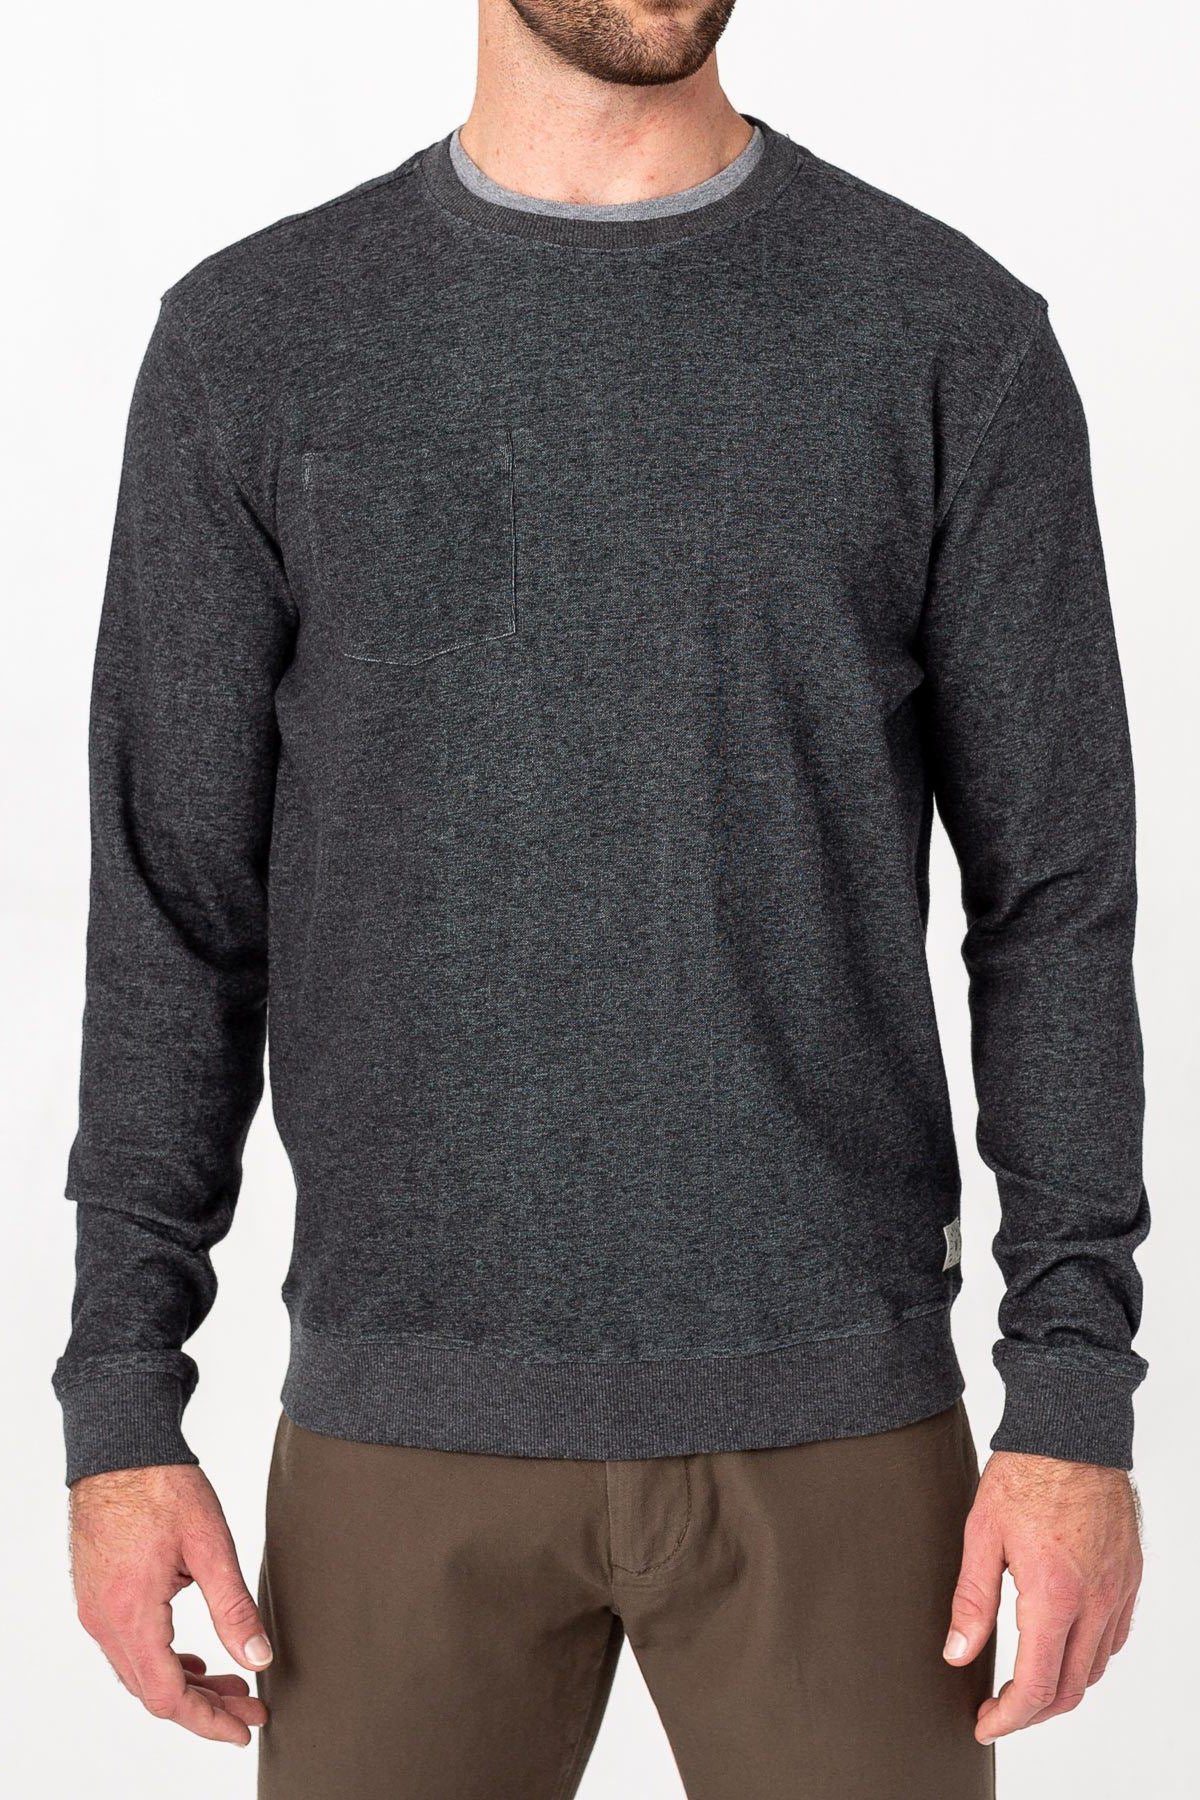 Linksoul Black Heather LS490 custom sweatshirts for business